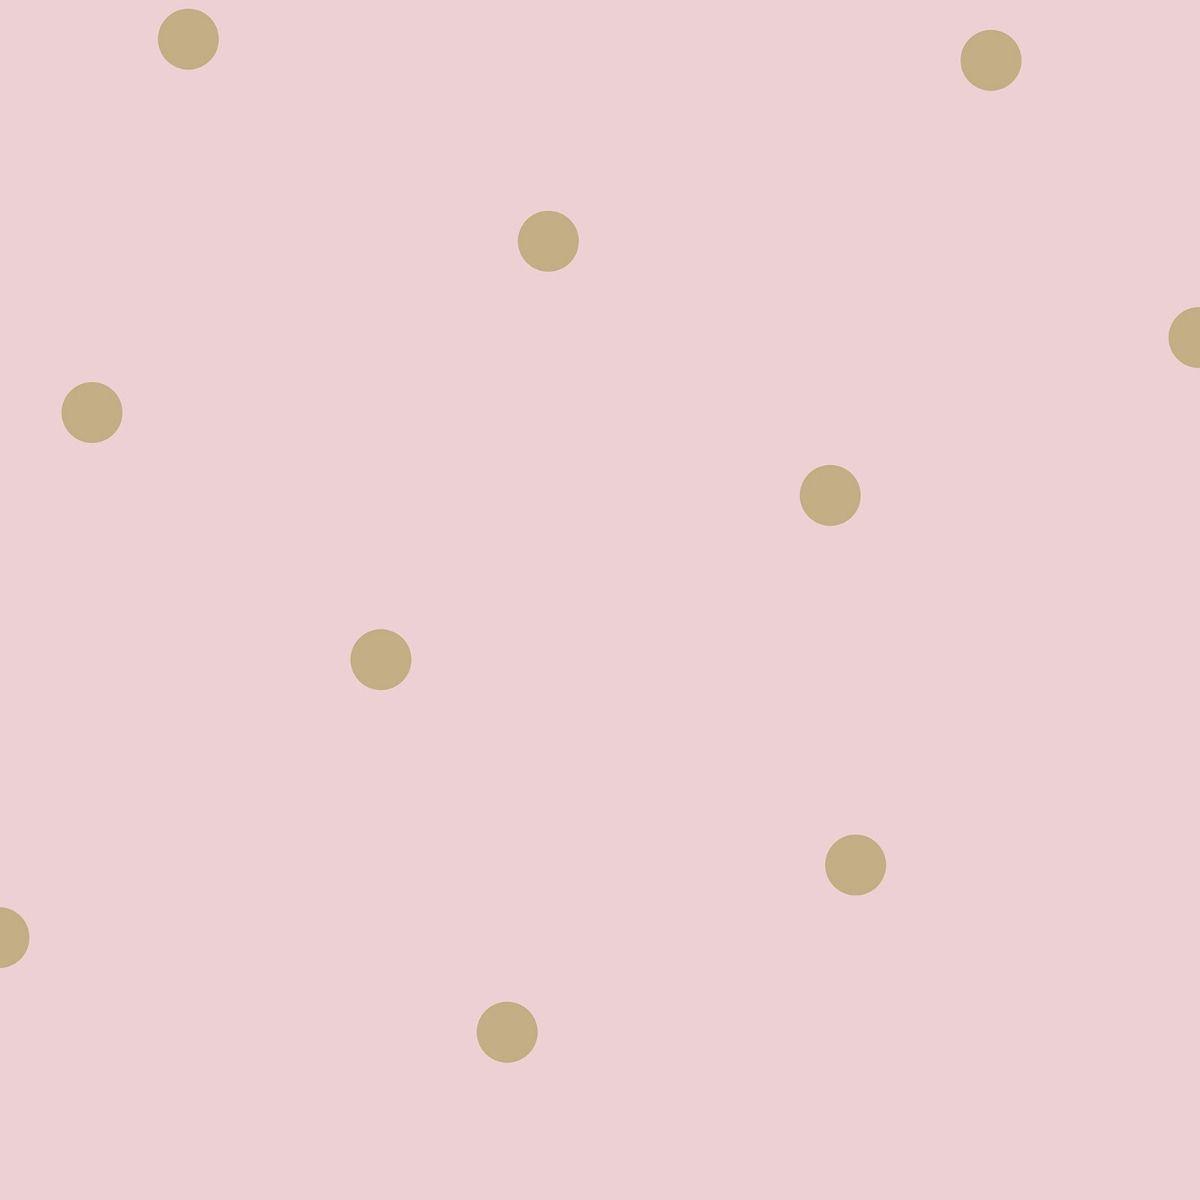 Pink Polka Dot Wallpapers - Top Free Pink Polka Dot Backgrounds ...